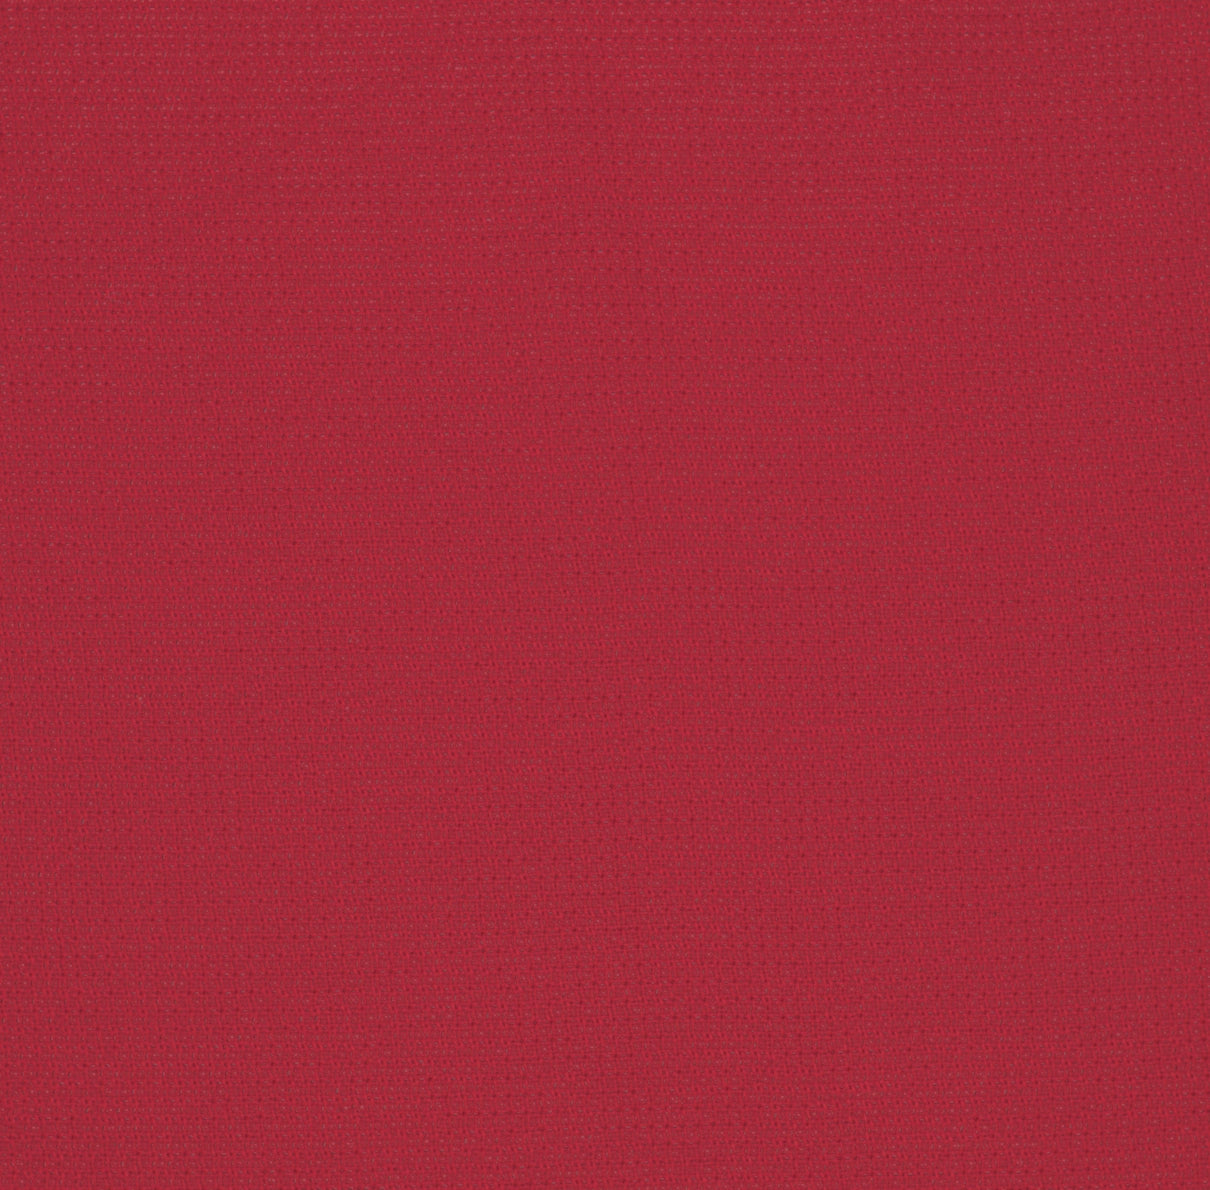 36002-05 Chinese Red Polyester Crepe Plain Dyed 100% 210g/yd 54&quot; plain dyed polyester red woven Solid Color - knit fabric - woven fabric - fabric company - fabric wholesale - fabric b2b - fabric factory - high quality fabric - hong kong fabric - fabric hk - acetate fabric - cotton fabric - linen fabric - metallic fabric - nylon fabric - polyester fabric - spandex fabric - chun wing hing - cwh hk - fabric worldwide ship - 針織布 - 梳織布 - 布料公司- 布料批發 - 香港布料 - 秦榮興